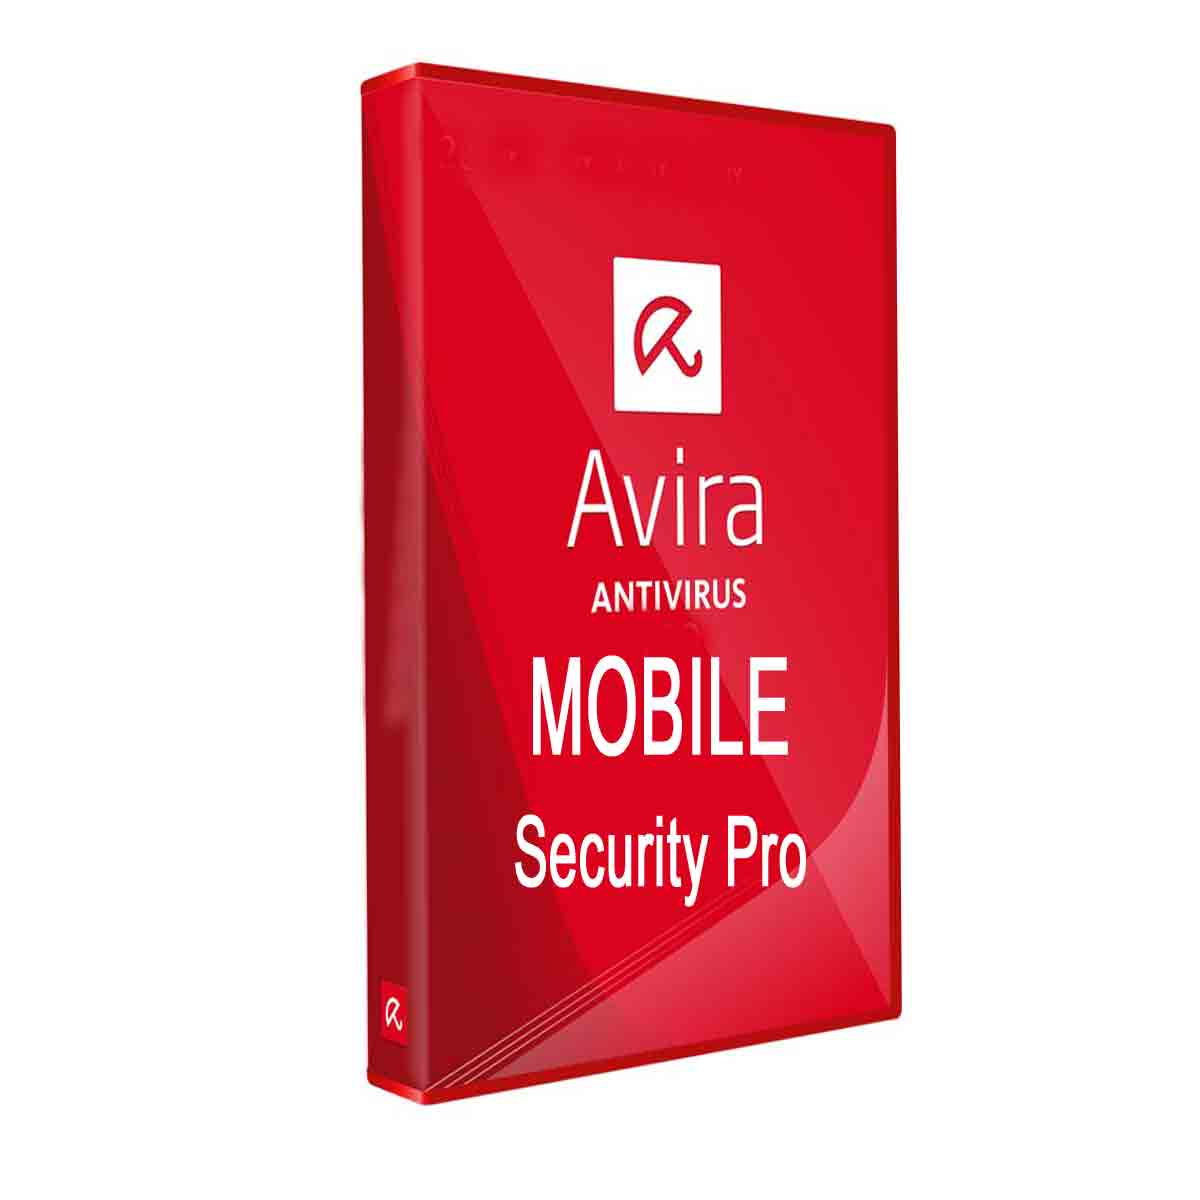 Avira Mobile Security Pro License Key - 0800-090-3222 - Avira Serial Key